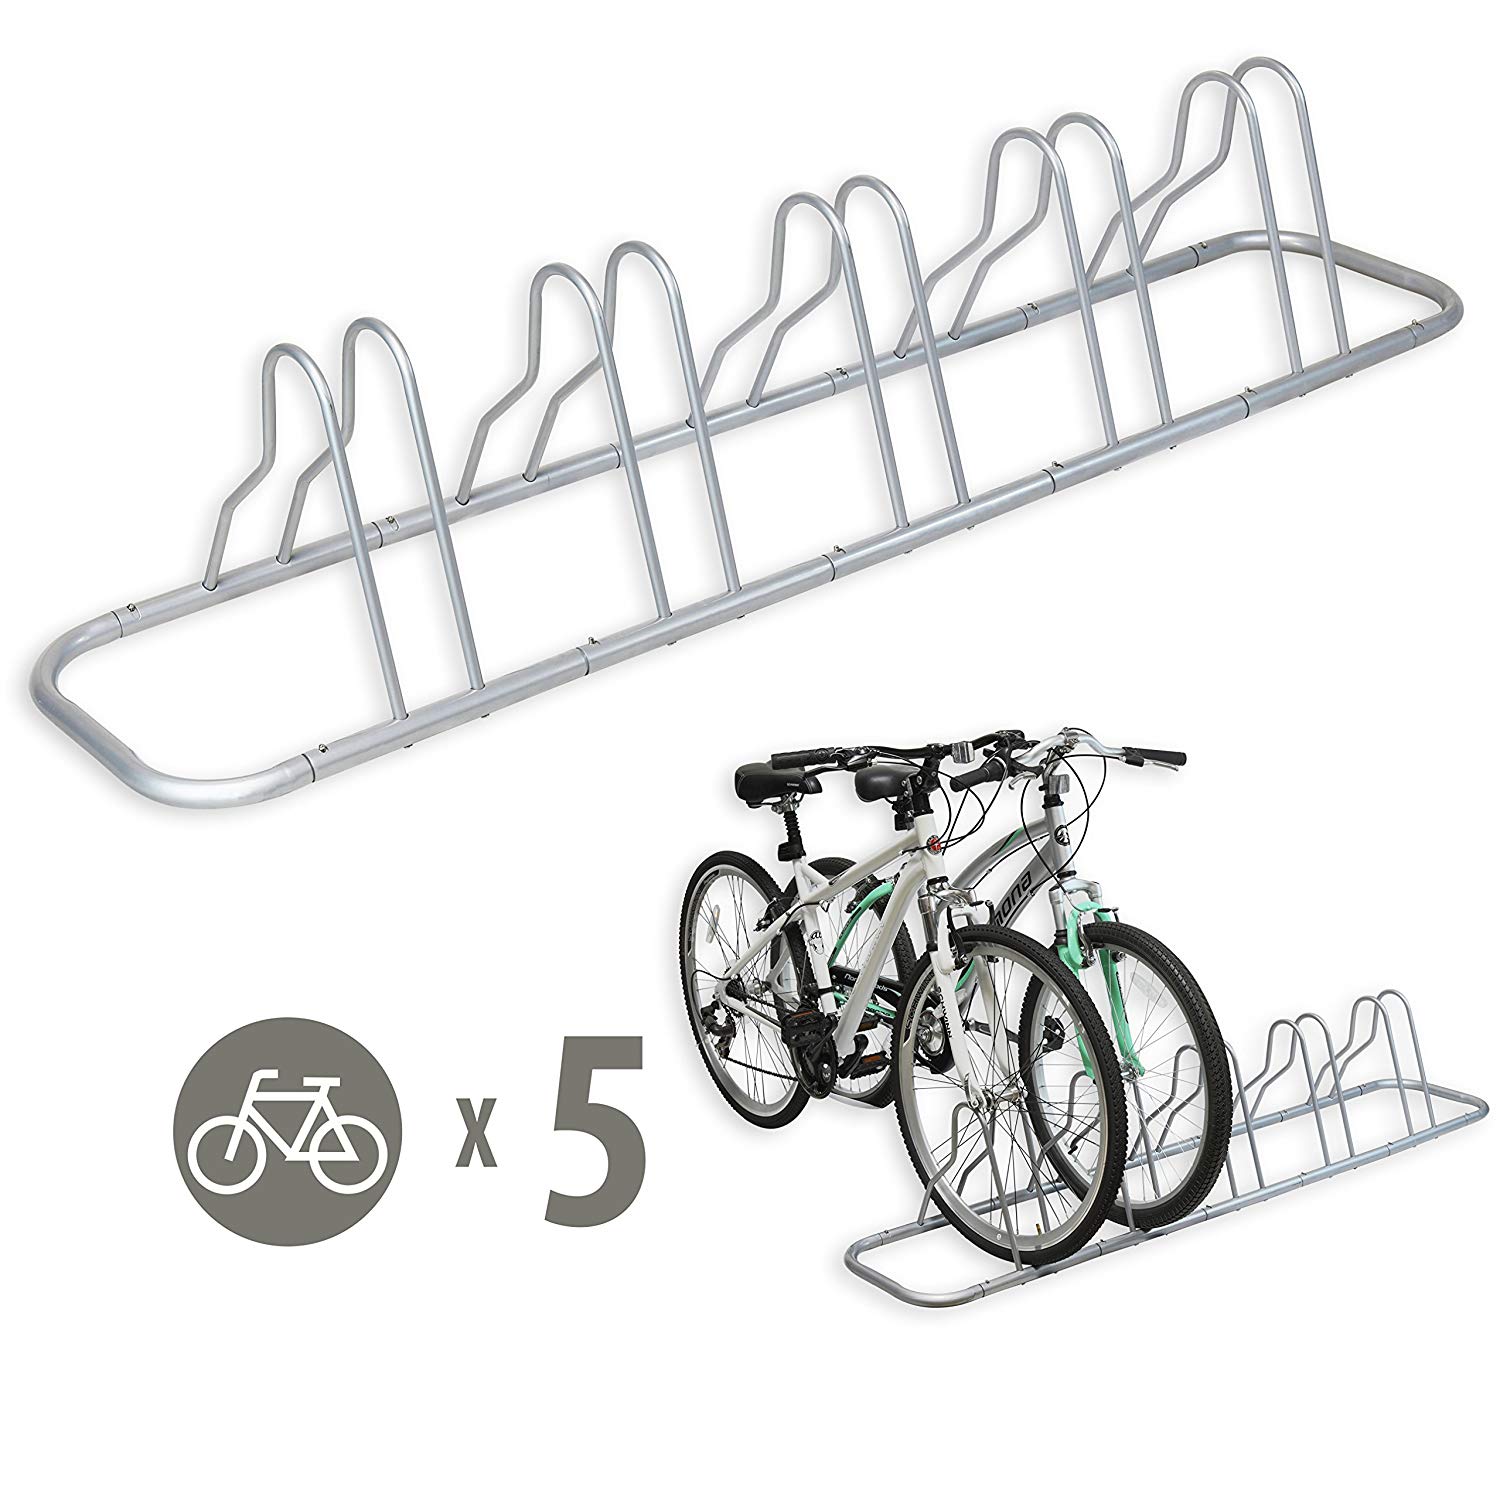 clipart bicycle bike rack